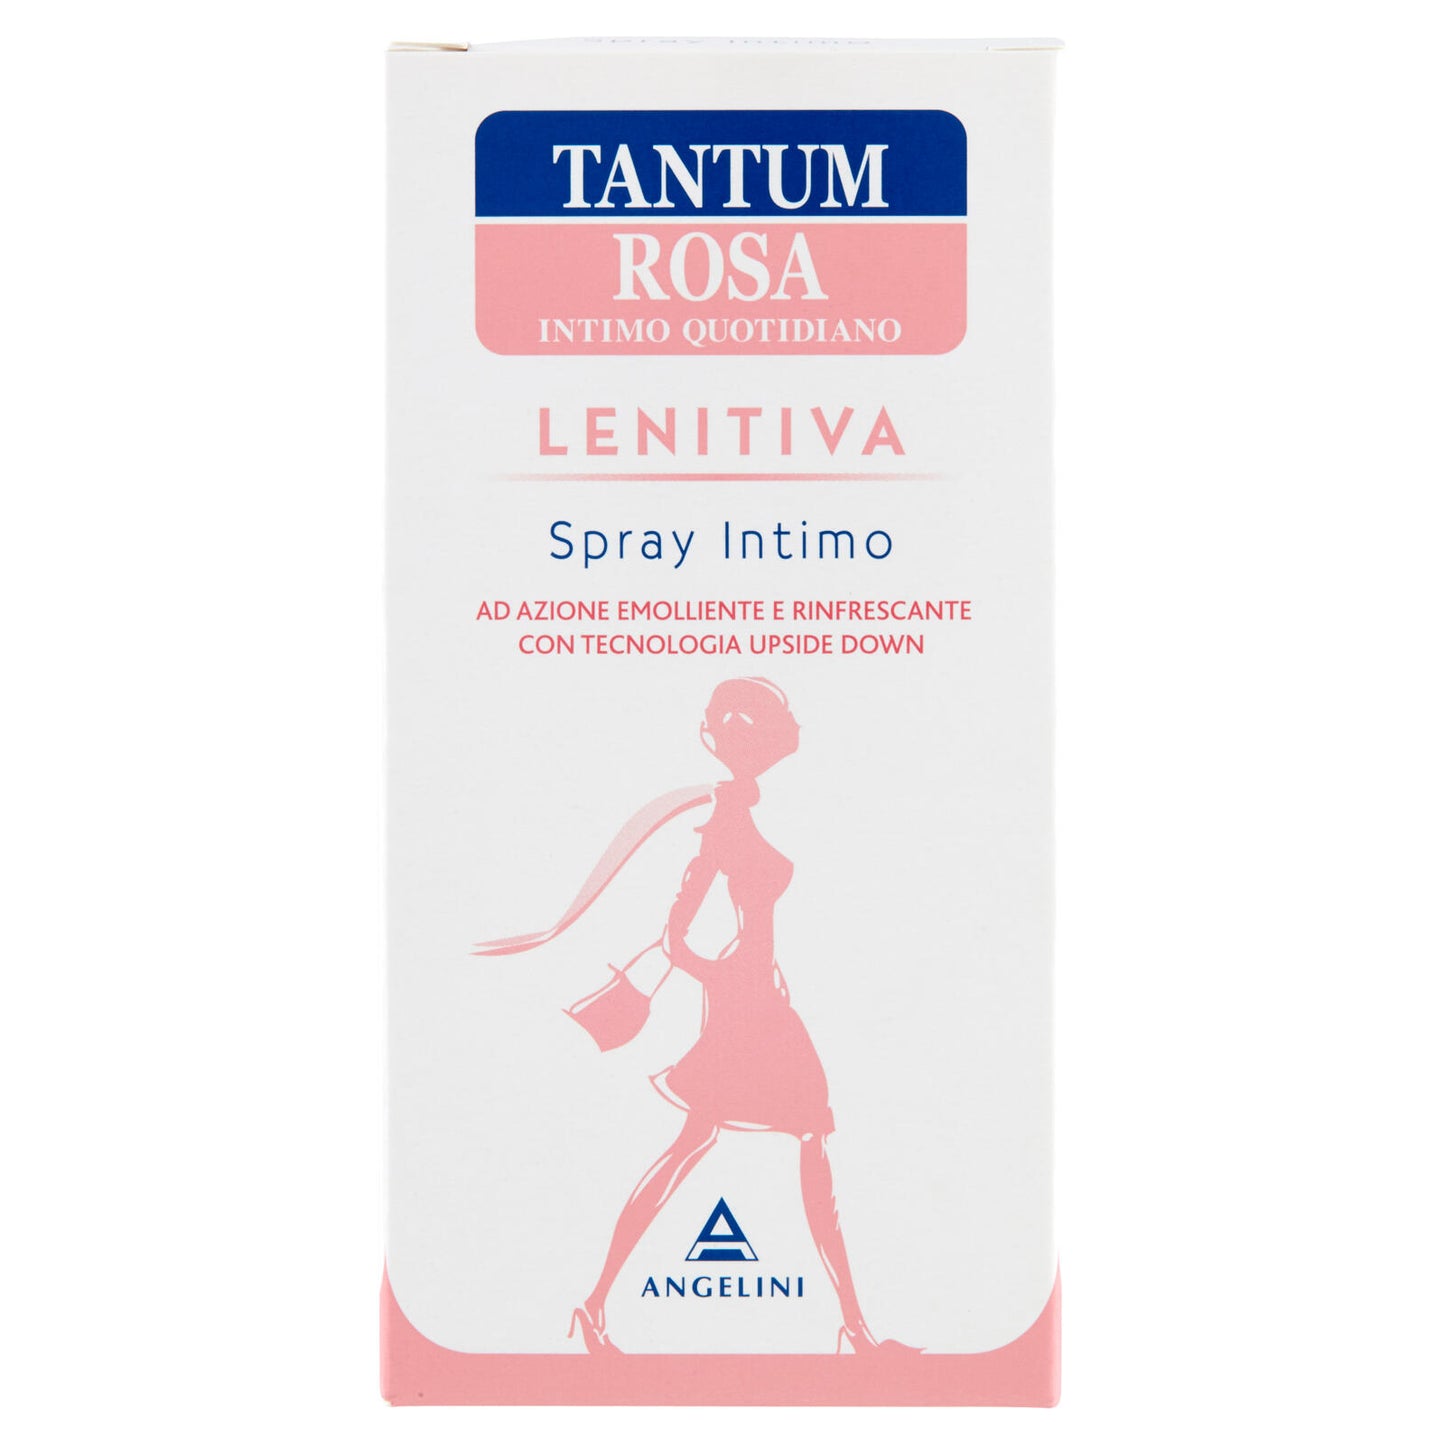 Tantum Rosa Intimo Quotidiano Lenitiva Spray Intimo 40 ml